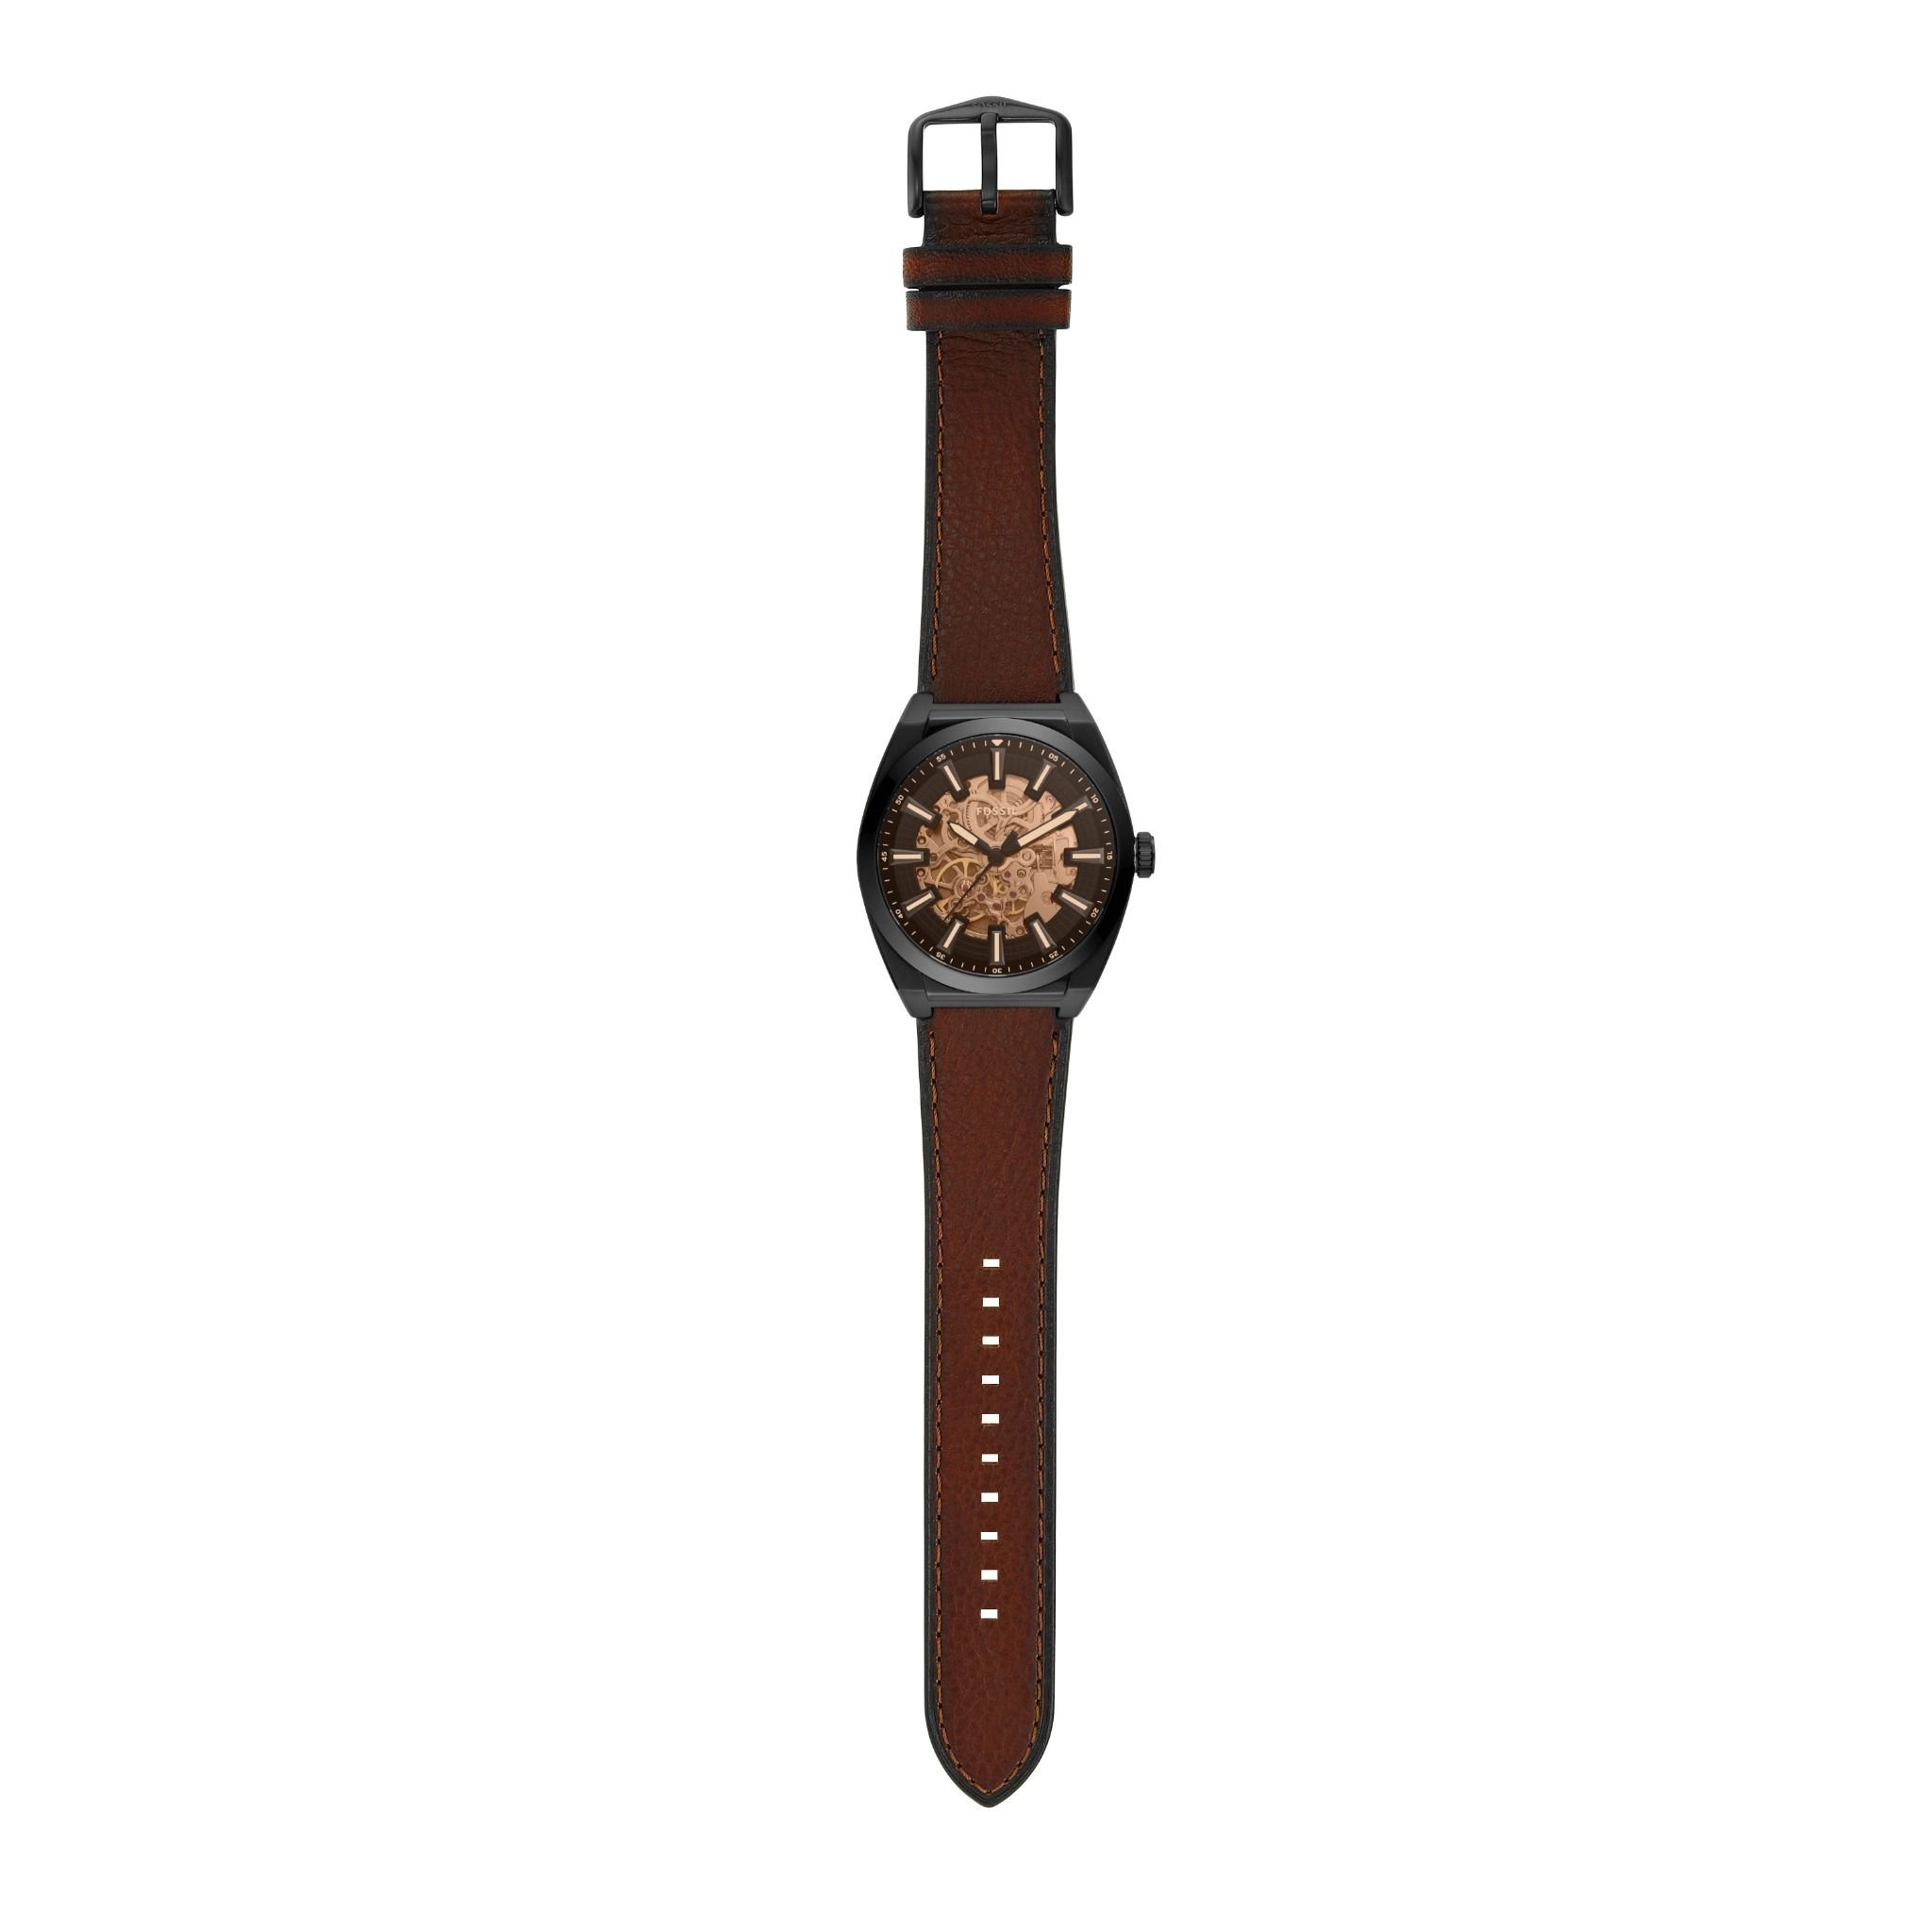  Đồng hồ nam Fossil EVERETT dây da ME3207 - màu nâu 